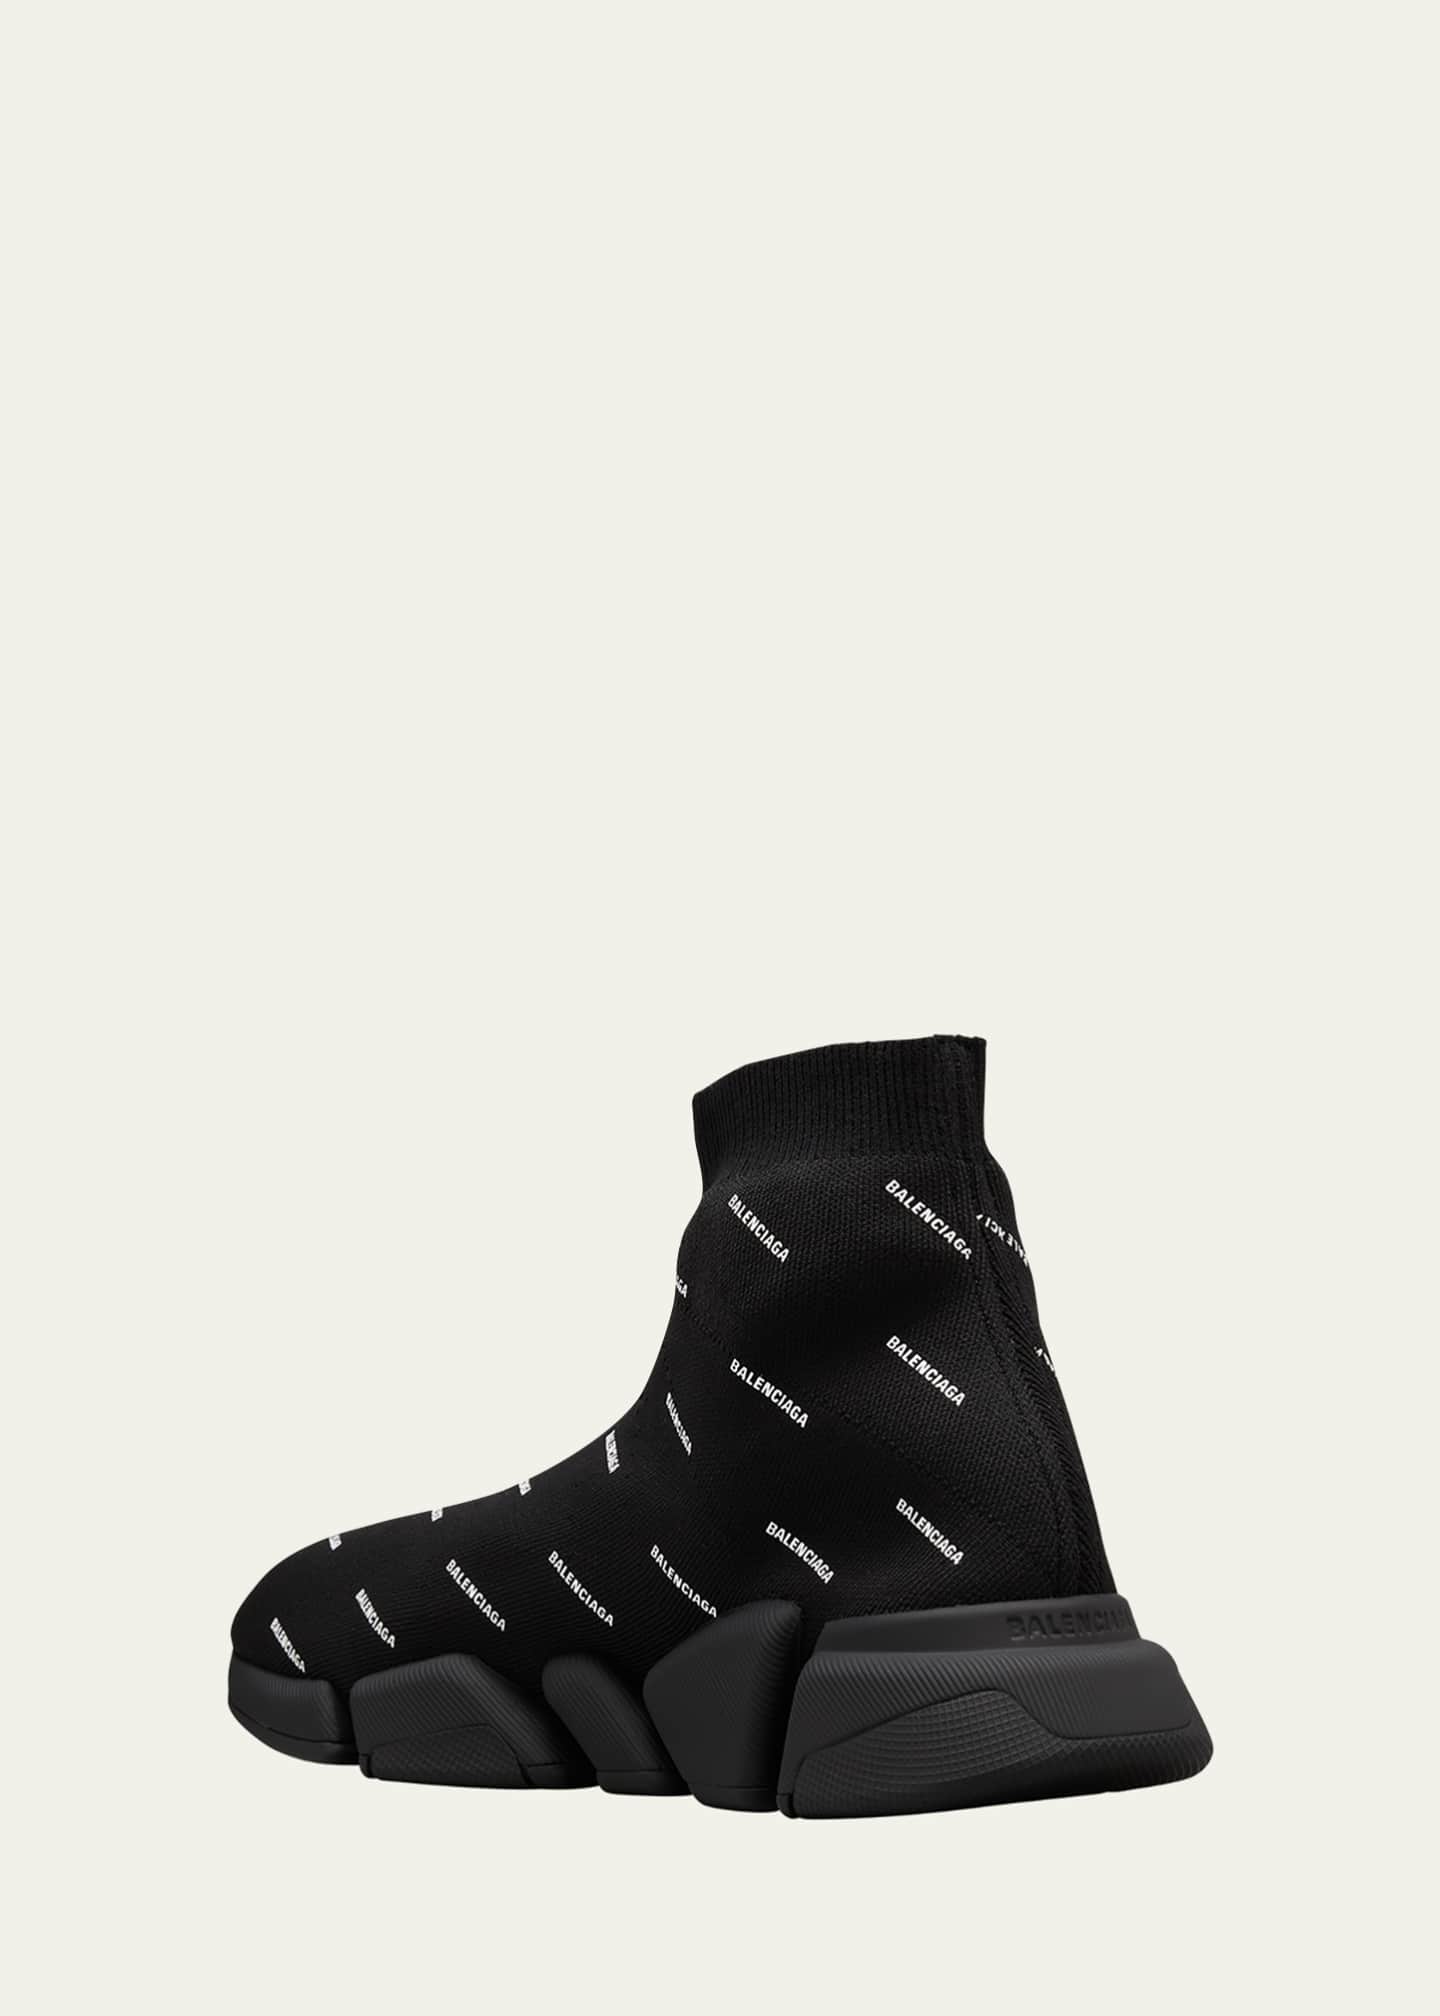 Balenciaga speed trainer all over logo high top sock sneaker Size 9